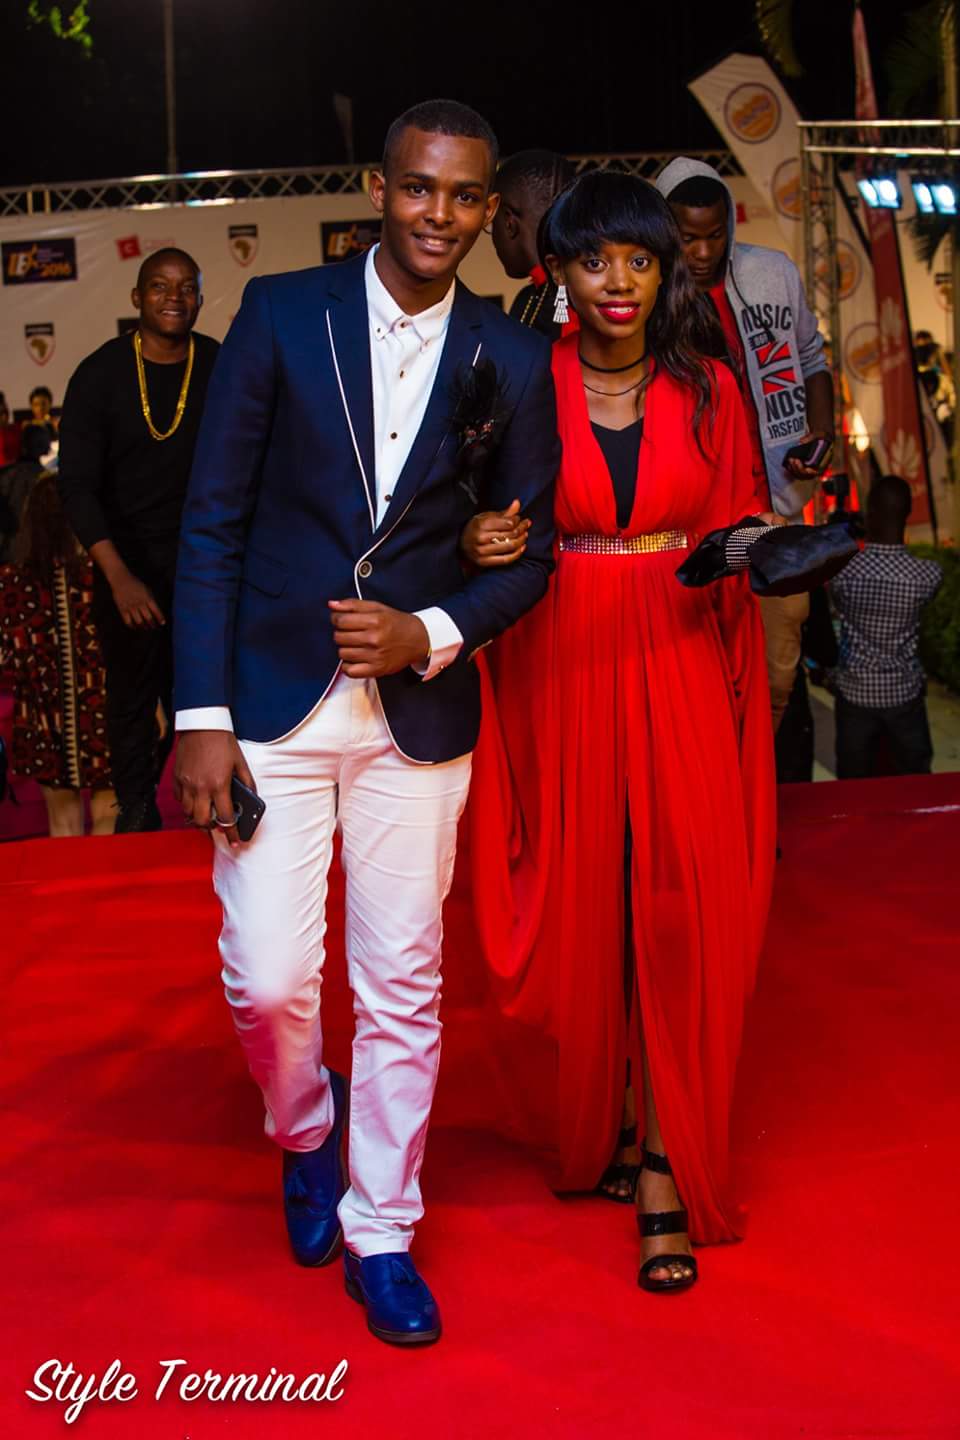 The power couple; Mugume Canary and his bae Sasha Ferguson